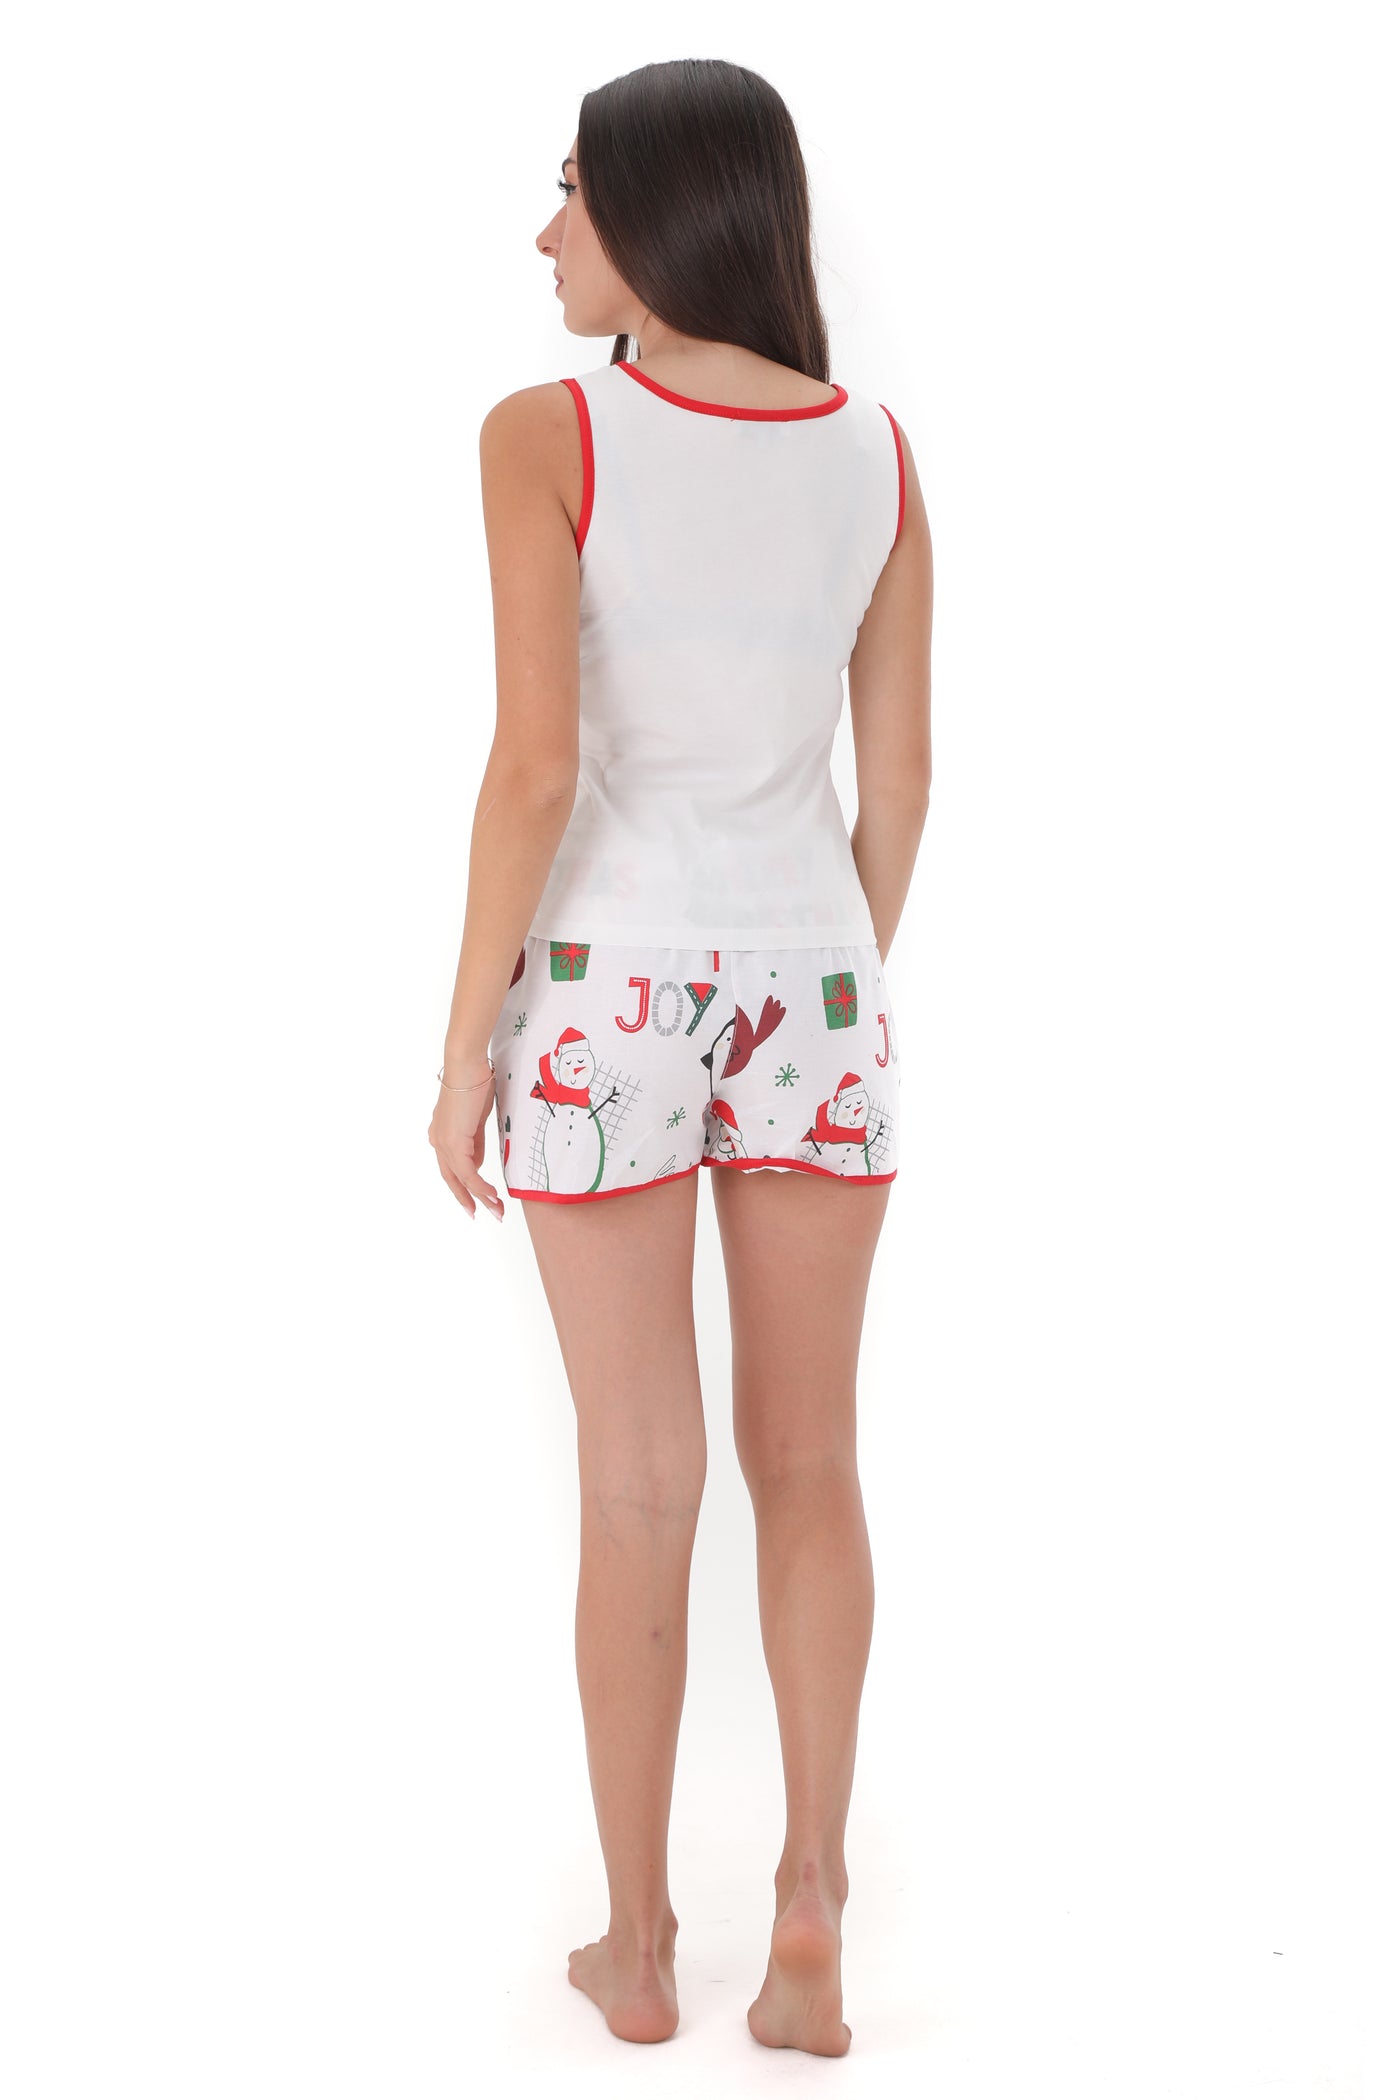 Chassca Singlet & Printed Short Christmas Pyjama Set